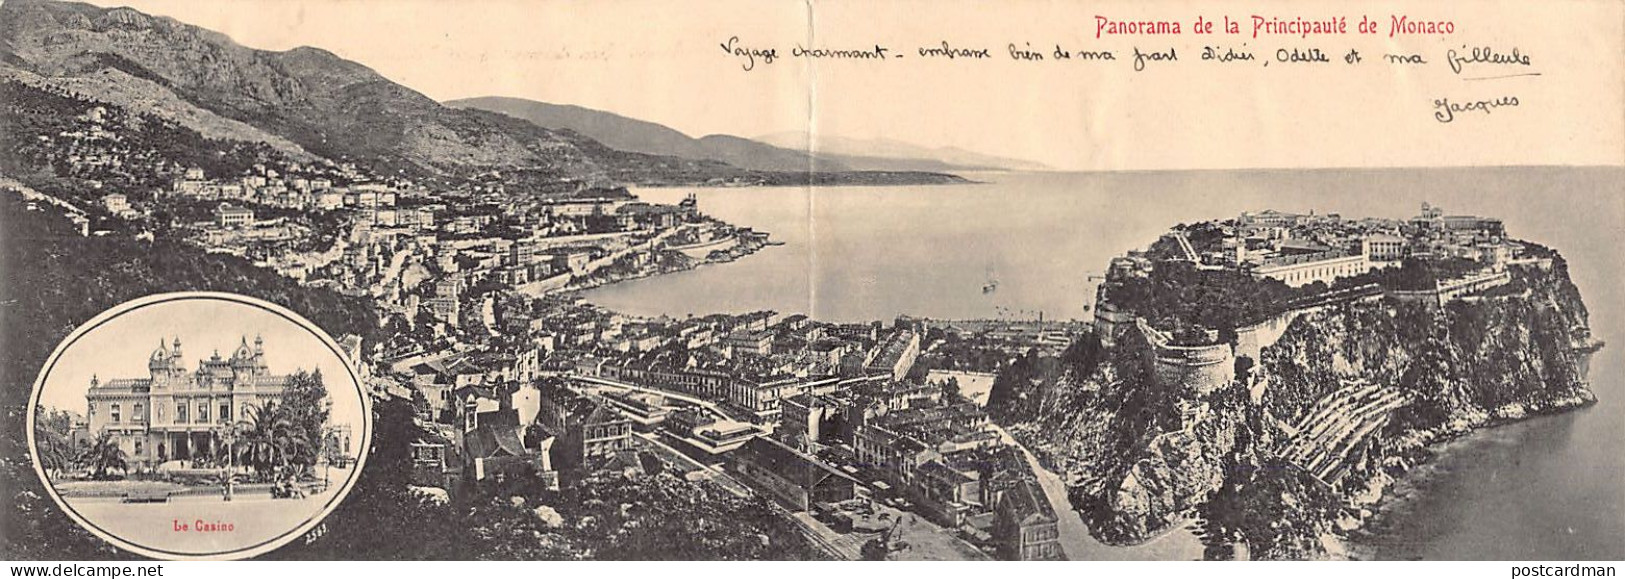 Panorama De La Principauté De Monaco - Le Casino - CARTE DOUBLE PANORAMIQUE - Viste Panoramiche, Panorama